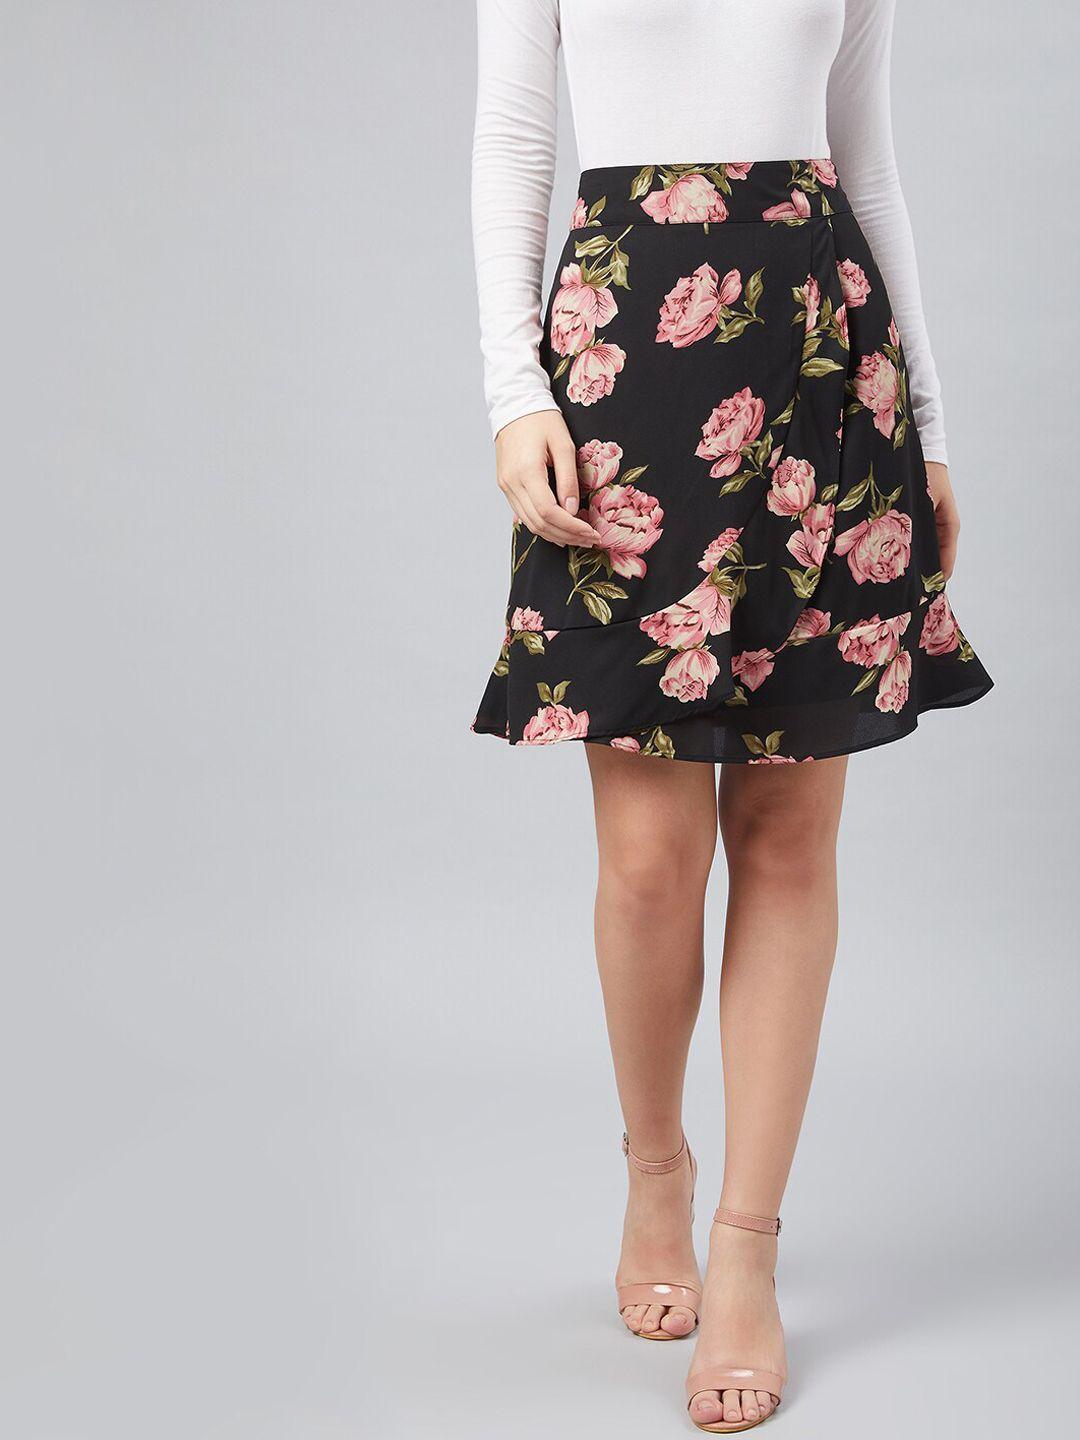 carlton-london-black-&-pink-printed-a-line-skirt